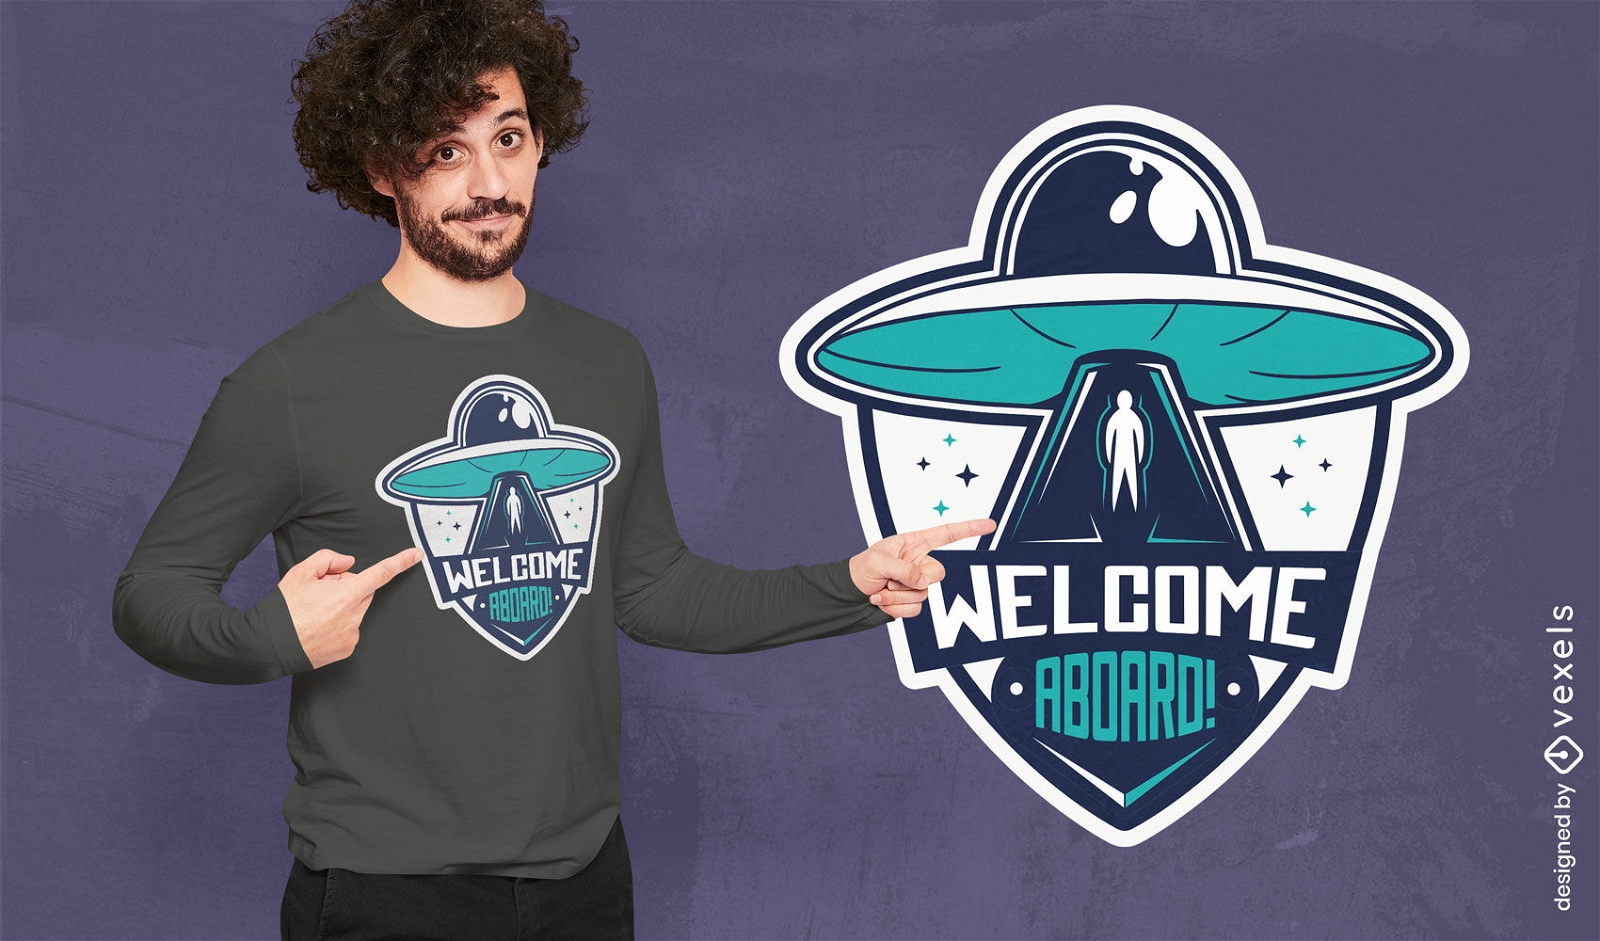 Welcome aboard alien spaceship t-shirt design